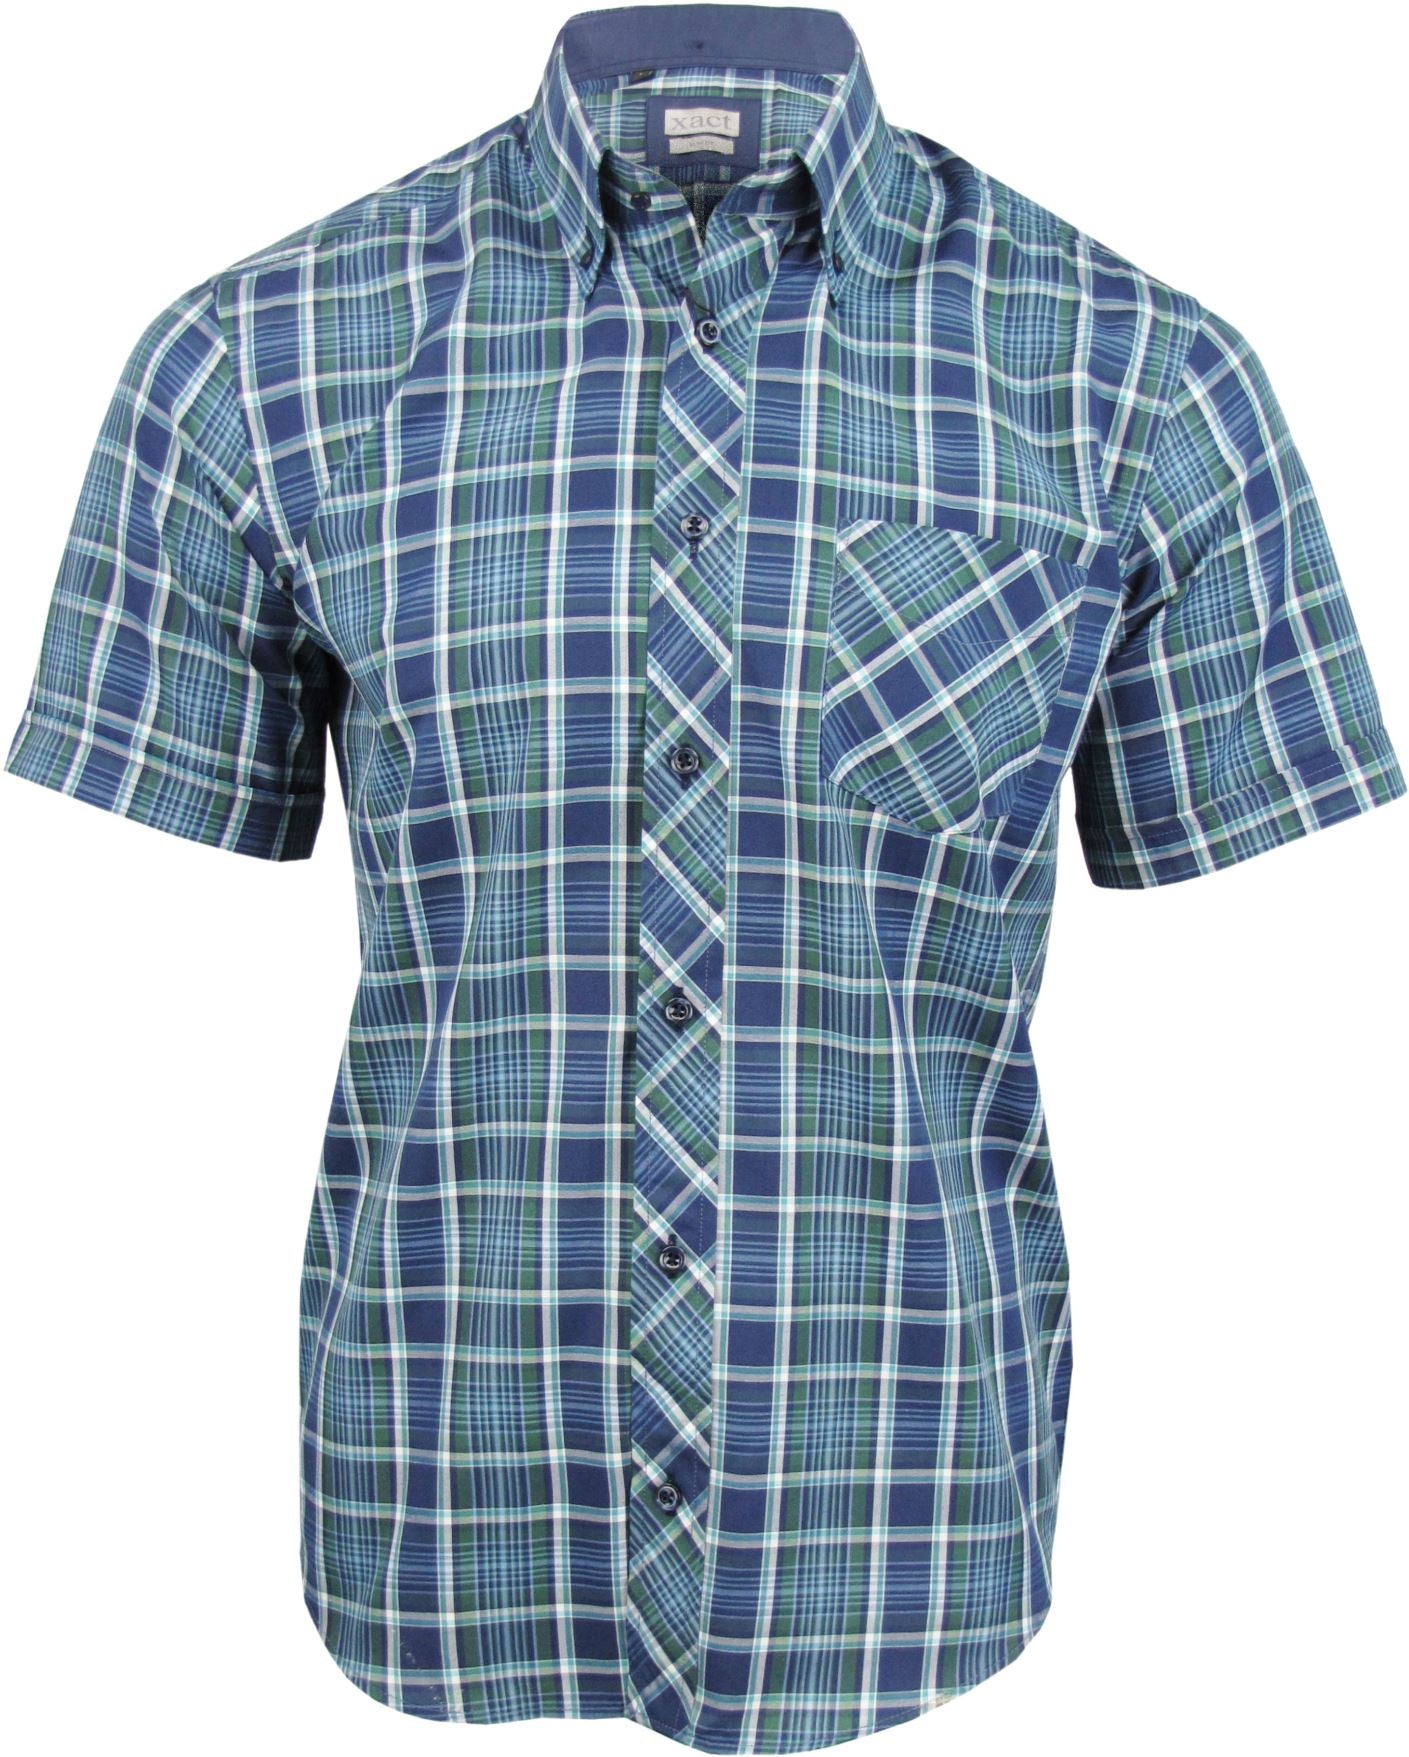 Mens Short Sleeve Check Shirt Button Down Collar Slim Fit By Xact-Main Image